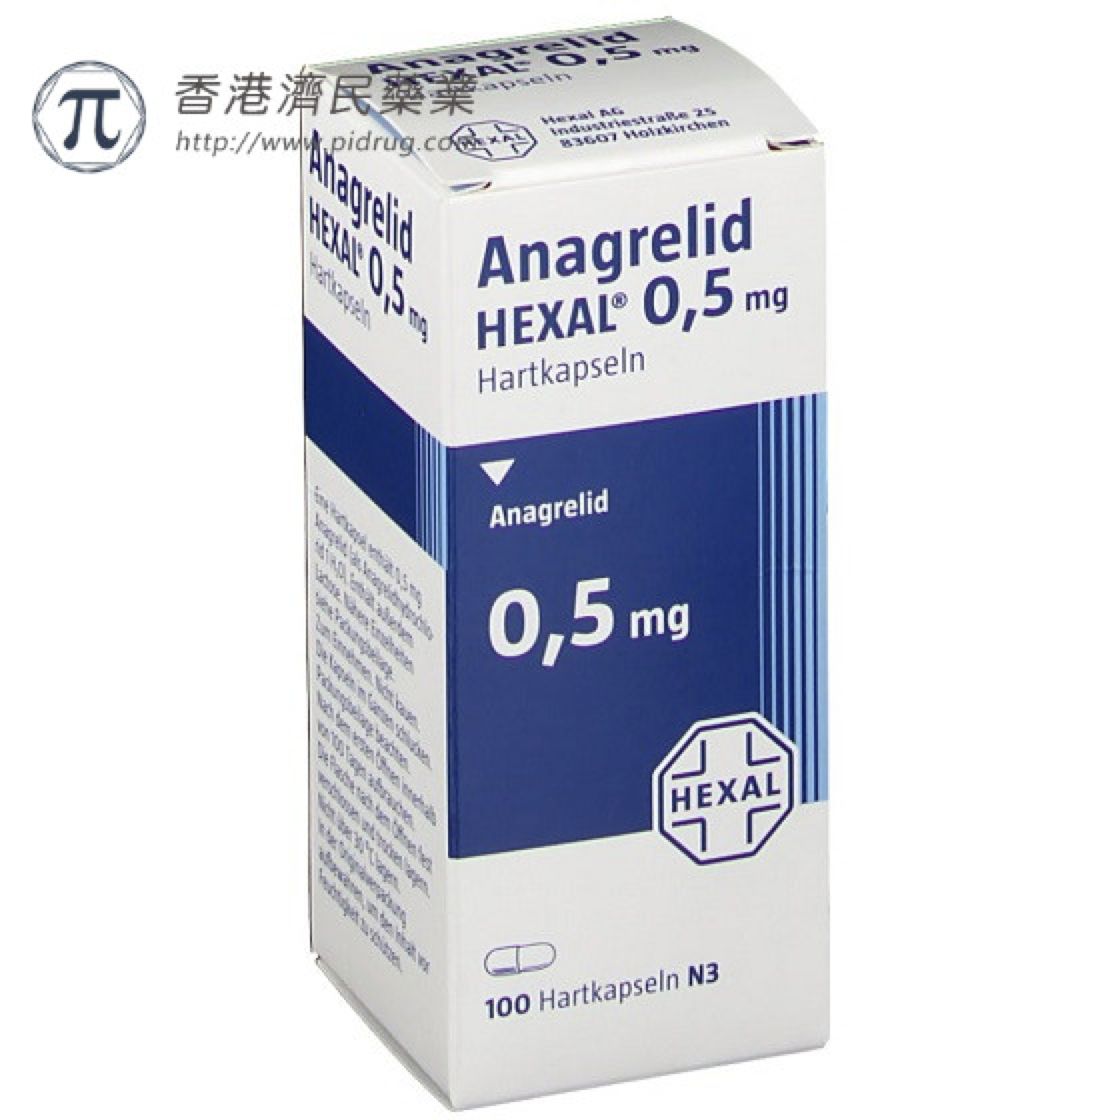 Anagrelid（阿那格雷）相关用法用量、不良反应及禁忌_香港济民药业